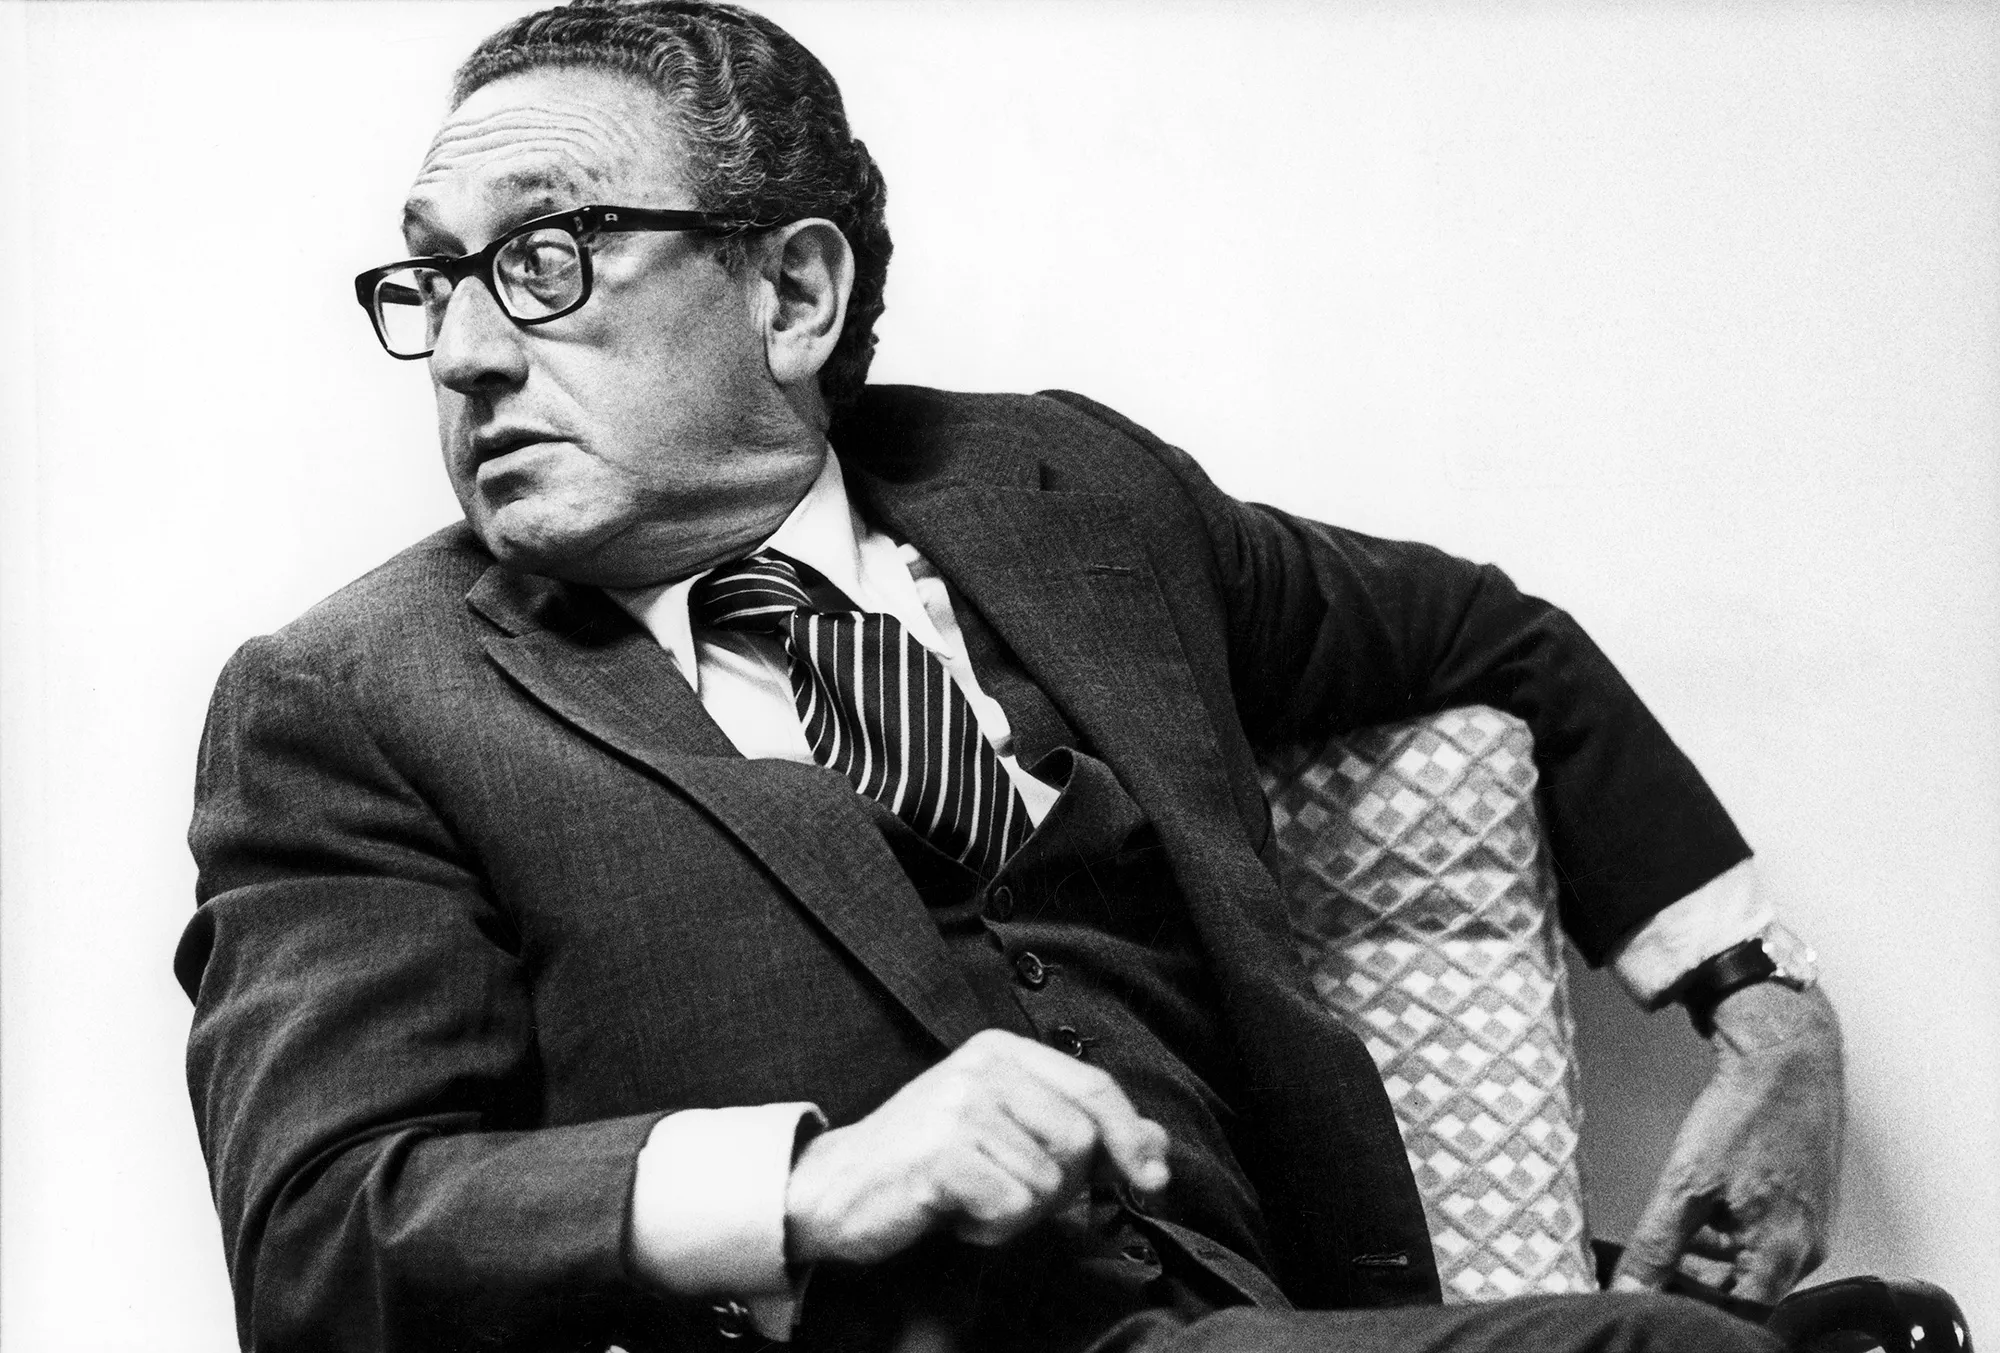 JLA Does Henry Kissinger Havea Conscience